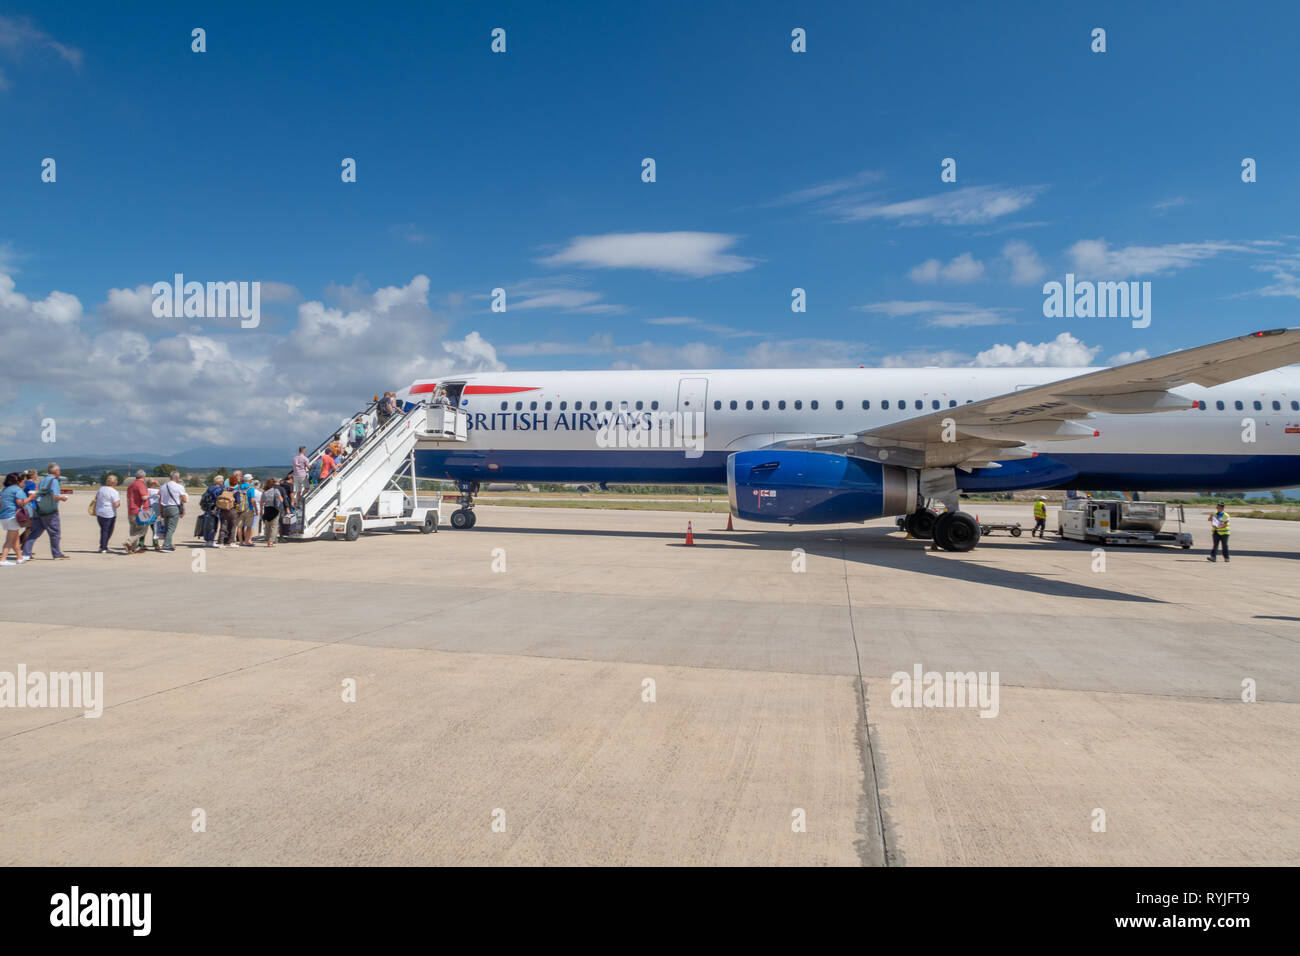 PREVEZA, GREECE - JUNE 10 2018: Passengers boarding  a British Airways airplane on Preveza airport tarmac in Greece Stock Photo